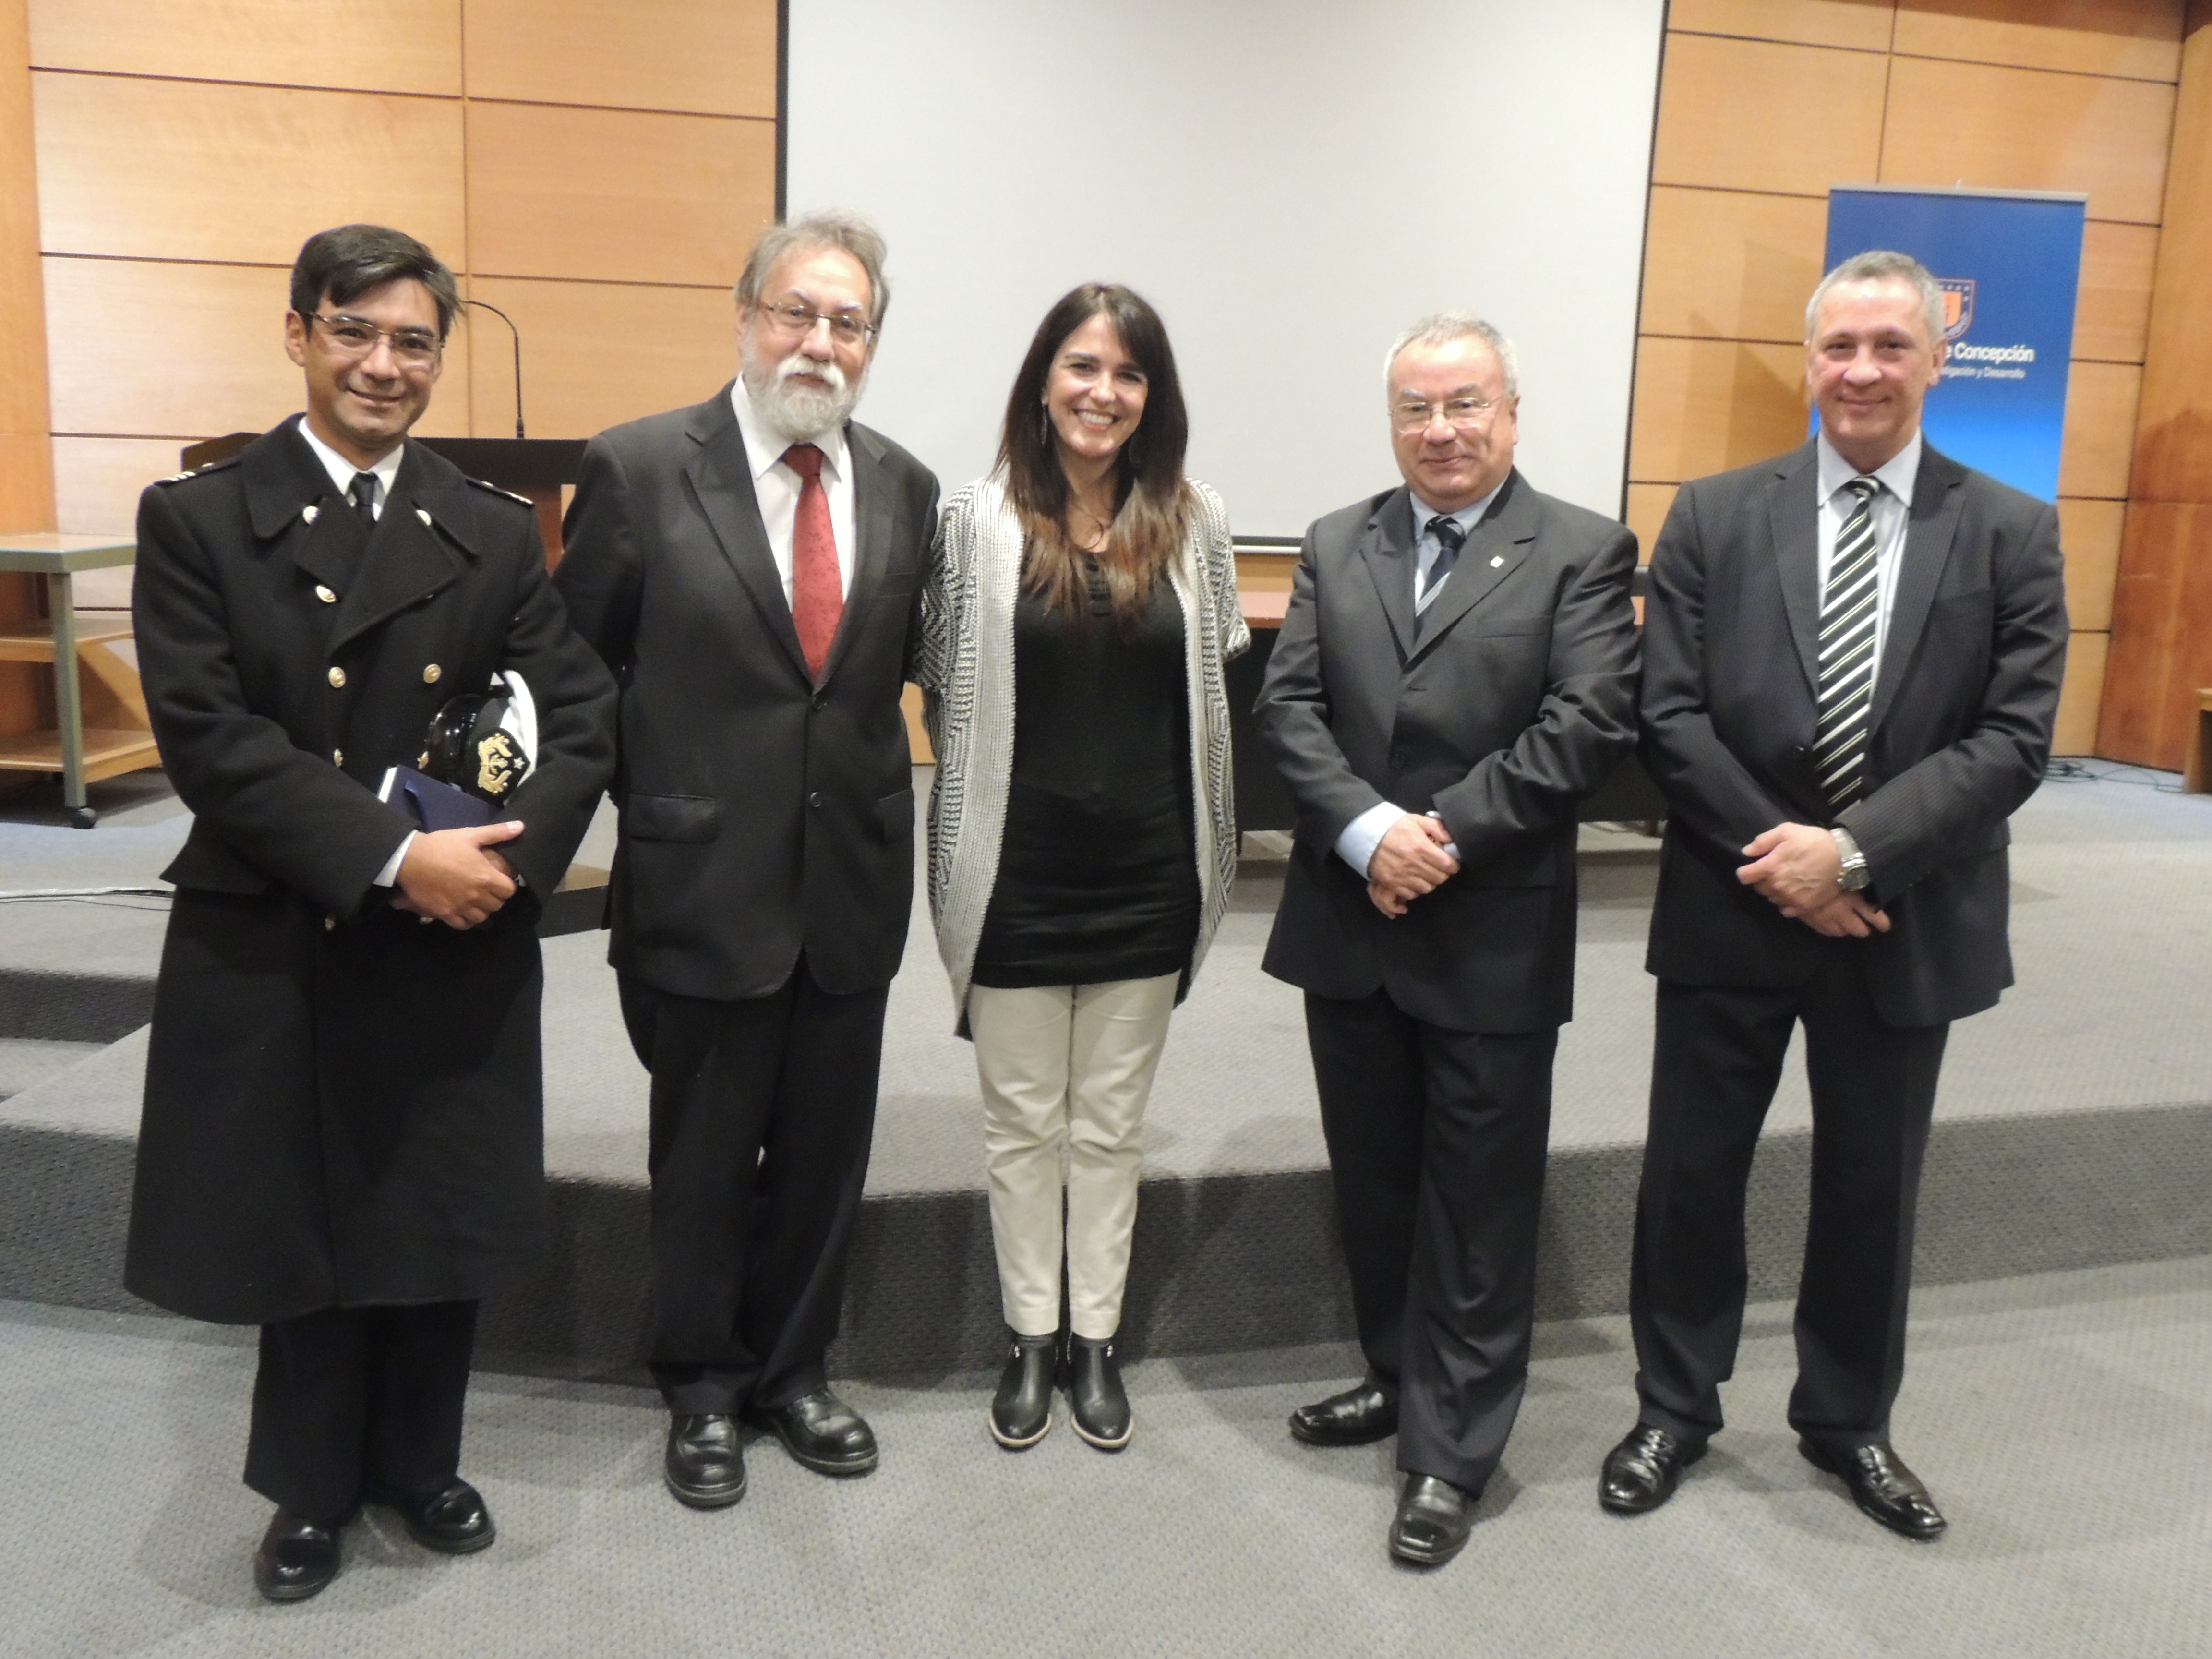 Teniente Ricardo Cartés, Dante Figueroa, Carola Venegas, Roberto Riquelme y Juan Matos Lale